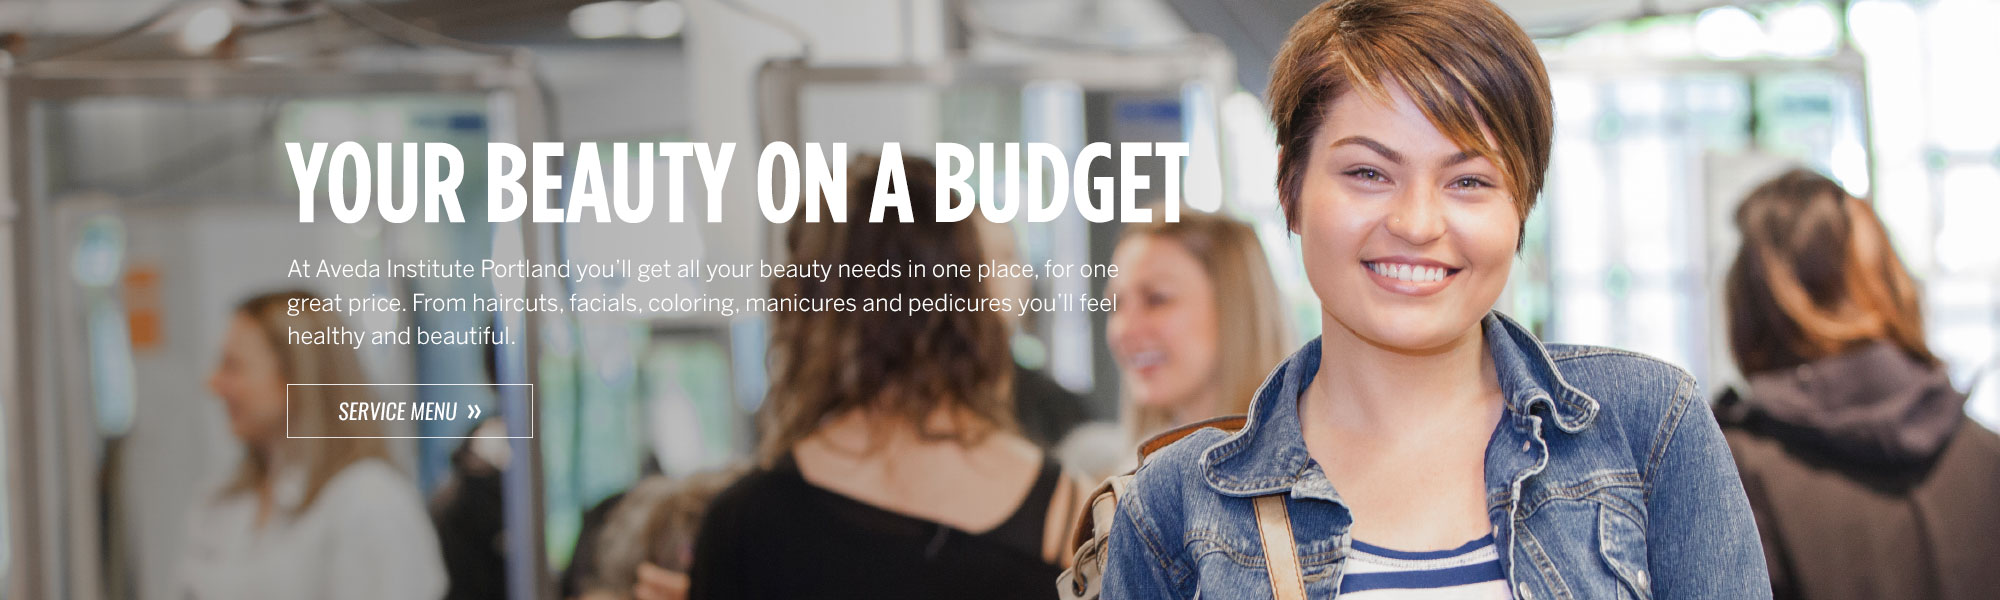 Beauty on a Budget - Aveda Institute Portland